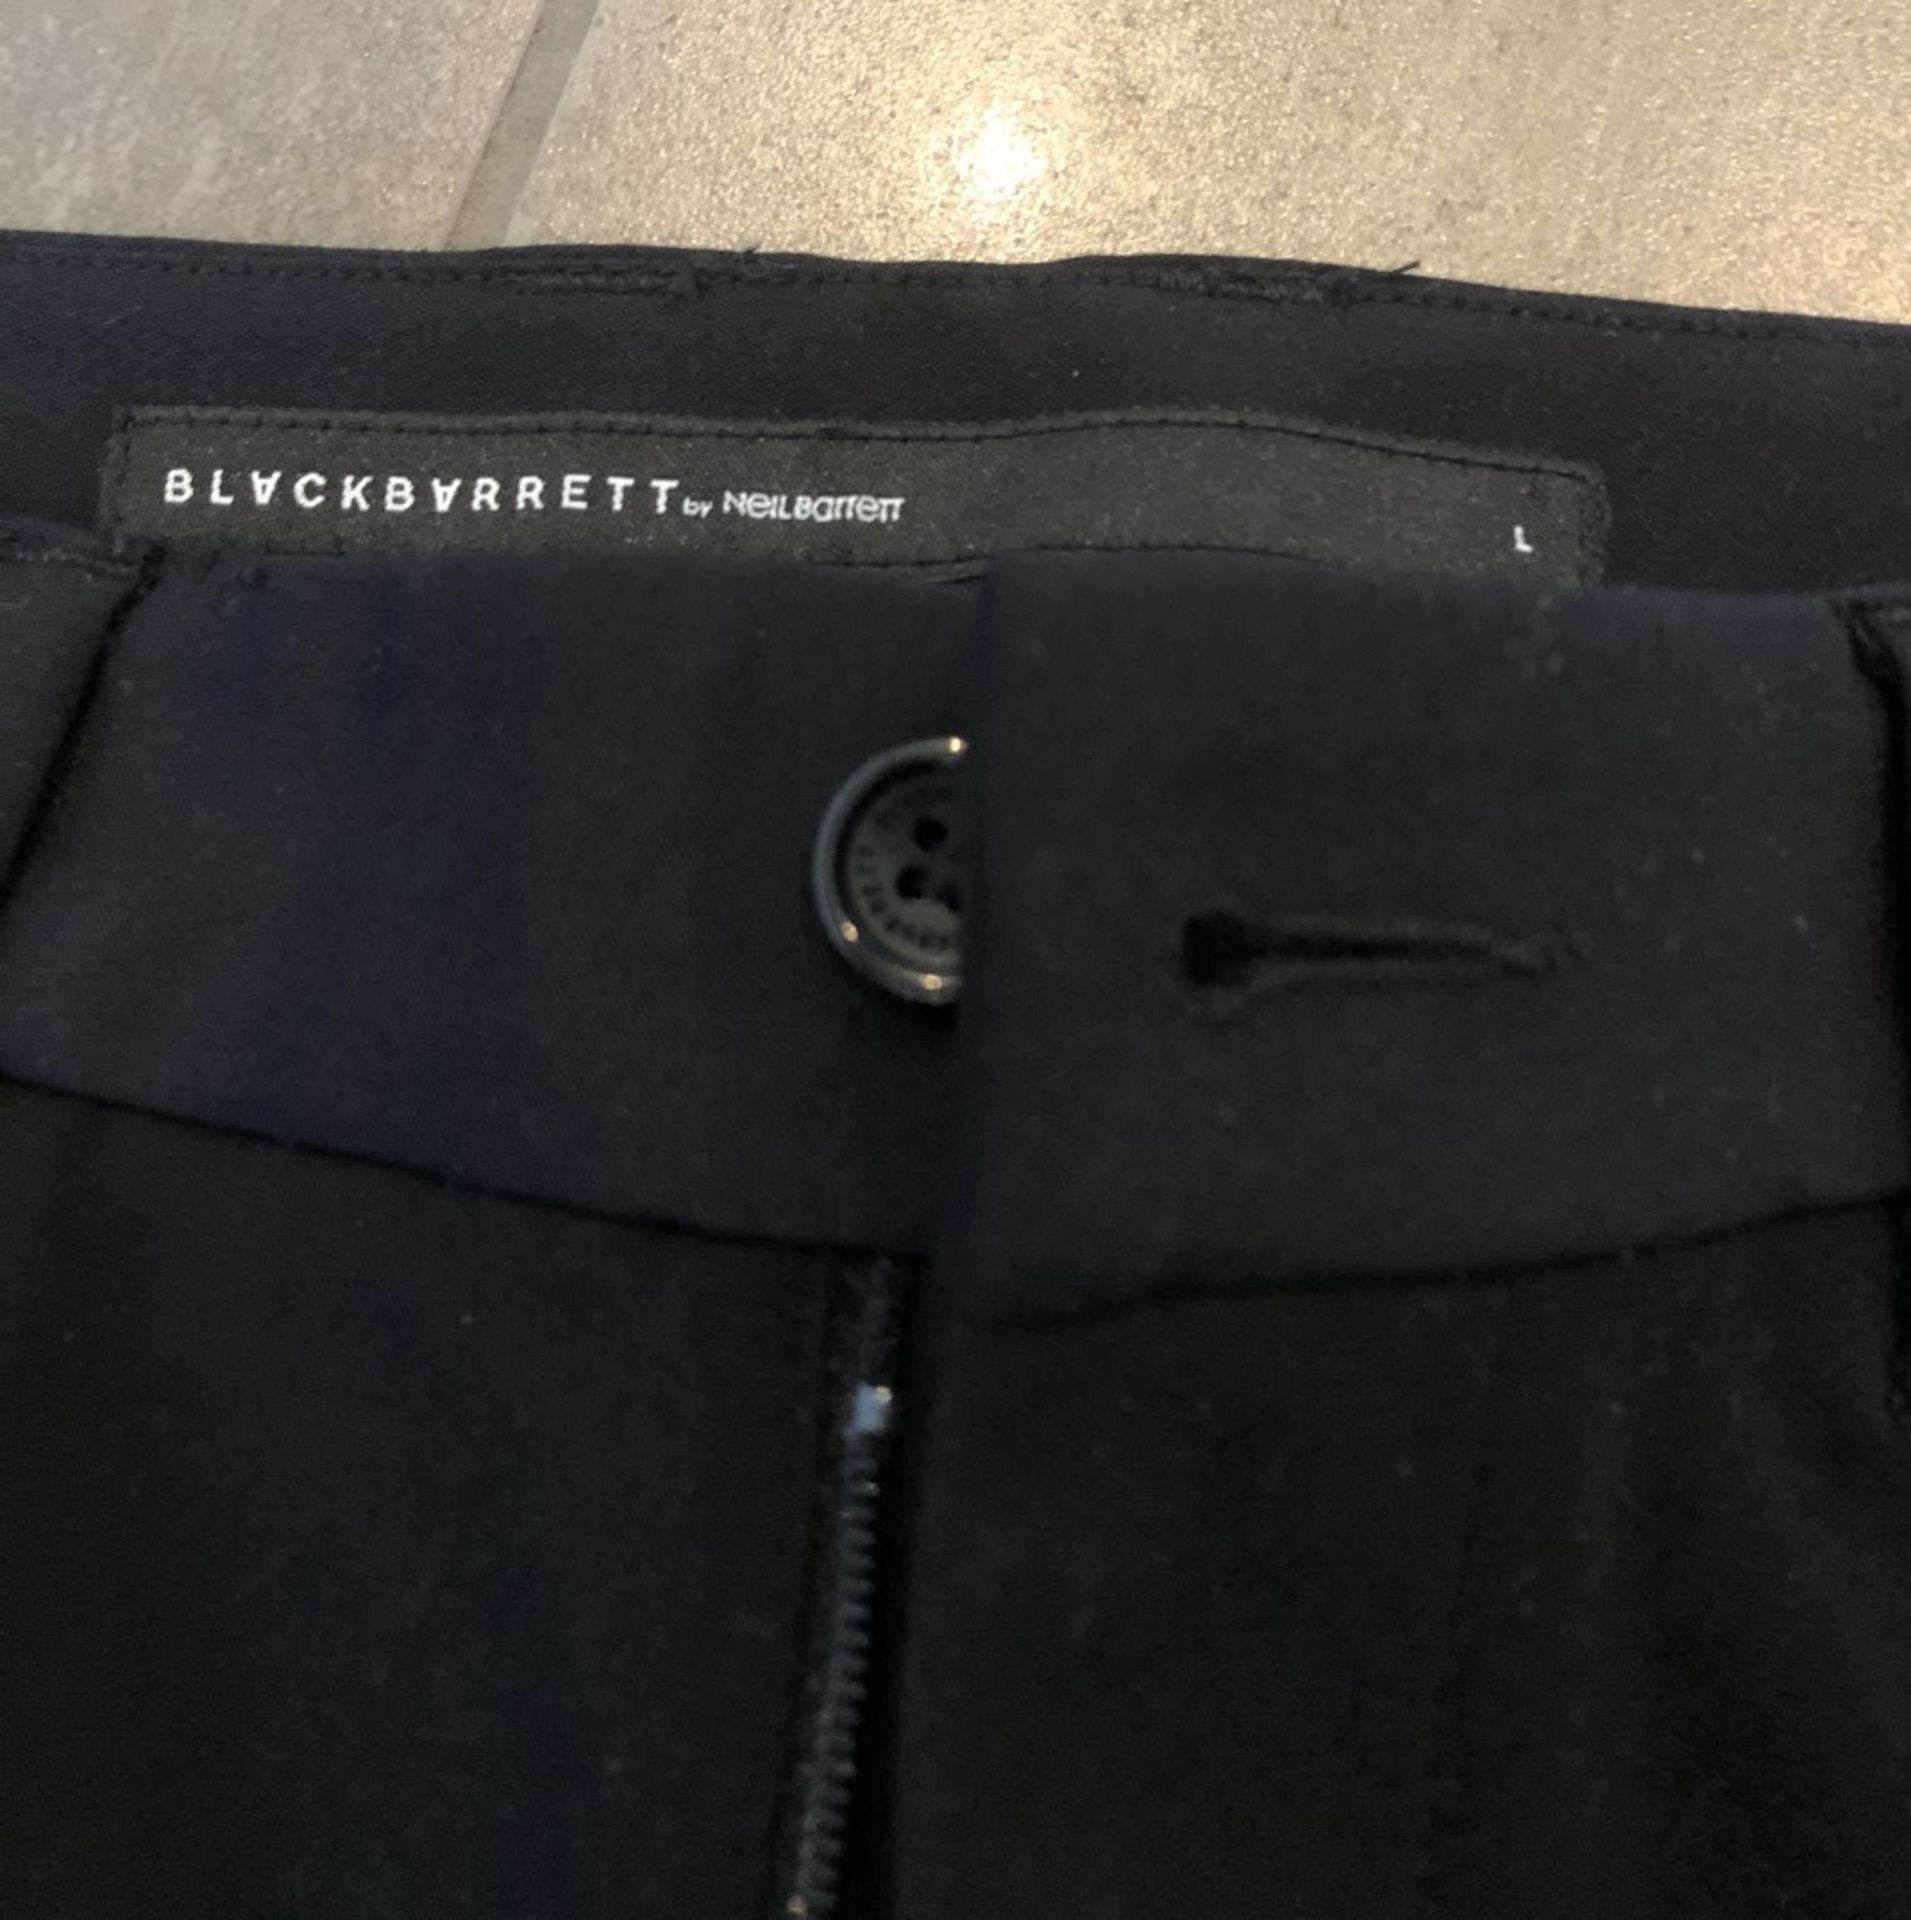 1 x Pair Of Men's Genuine Blackbarrett By Neil Barrett Trousers In Black - Size (EU/UK): L/L - - Image 3 of 6